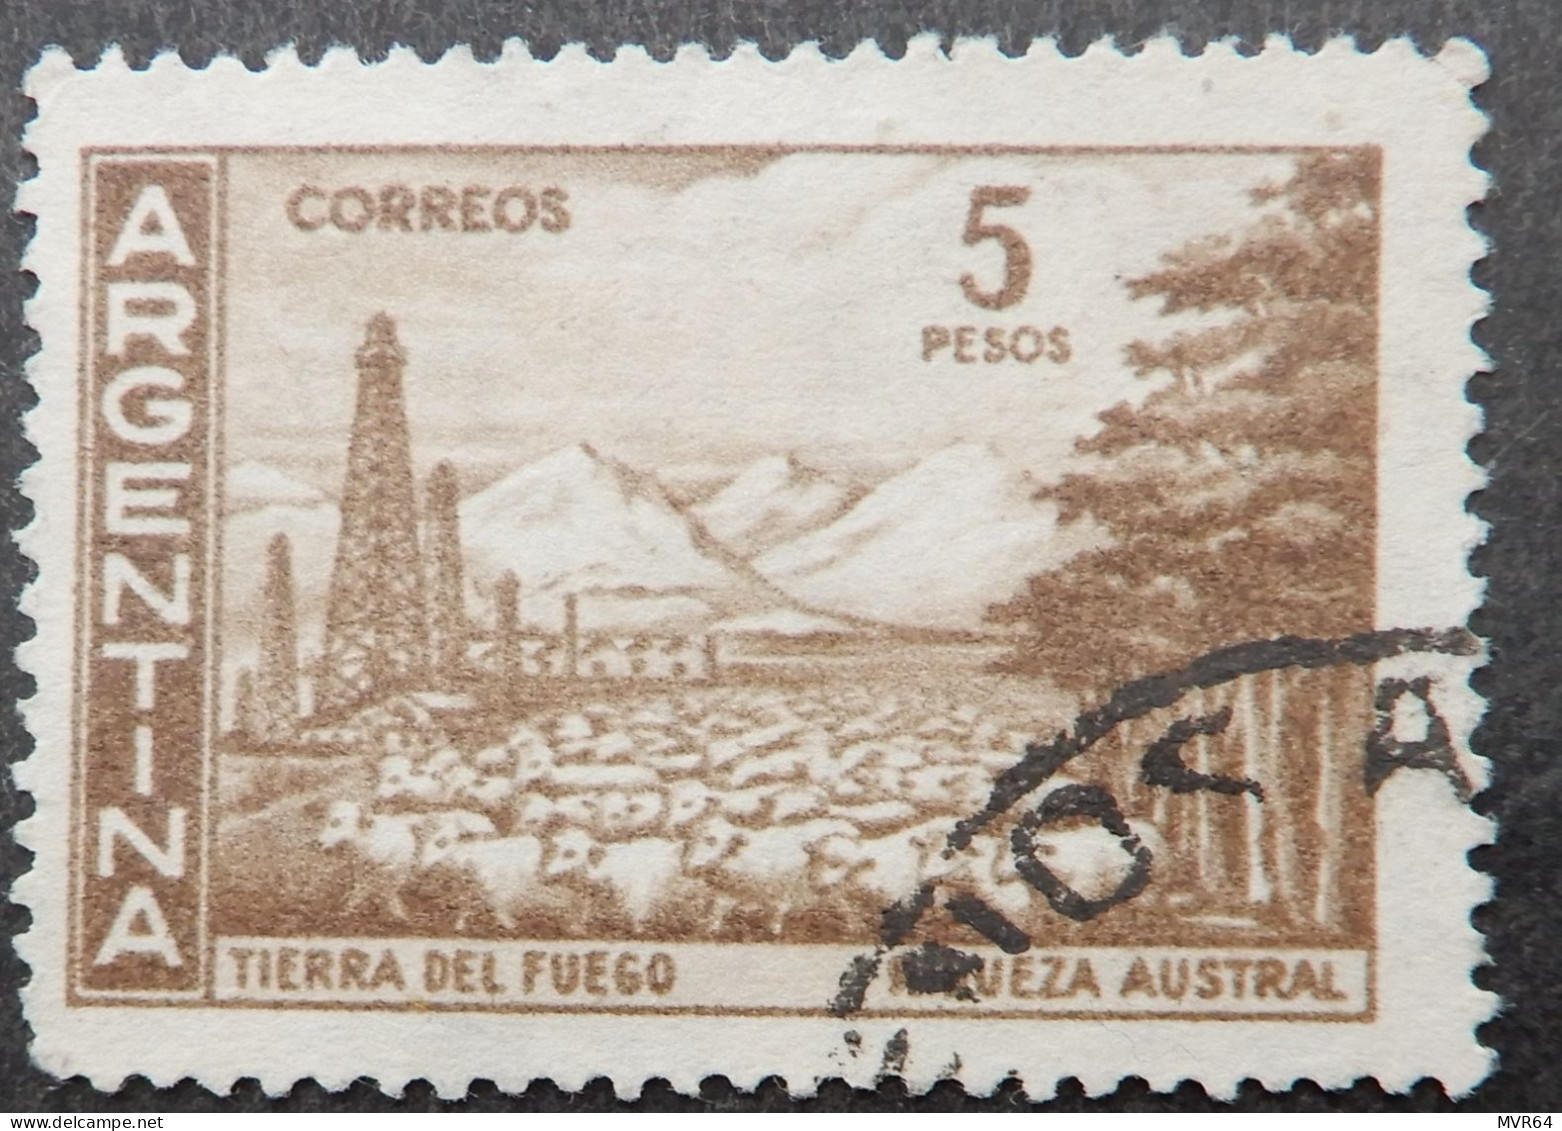 Argentinië Argentinia 1959 1960 (2) Country Views - Gebruikt